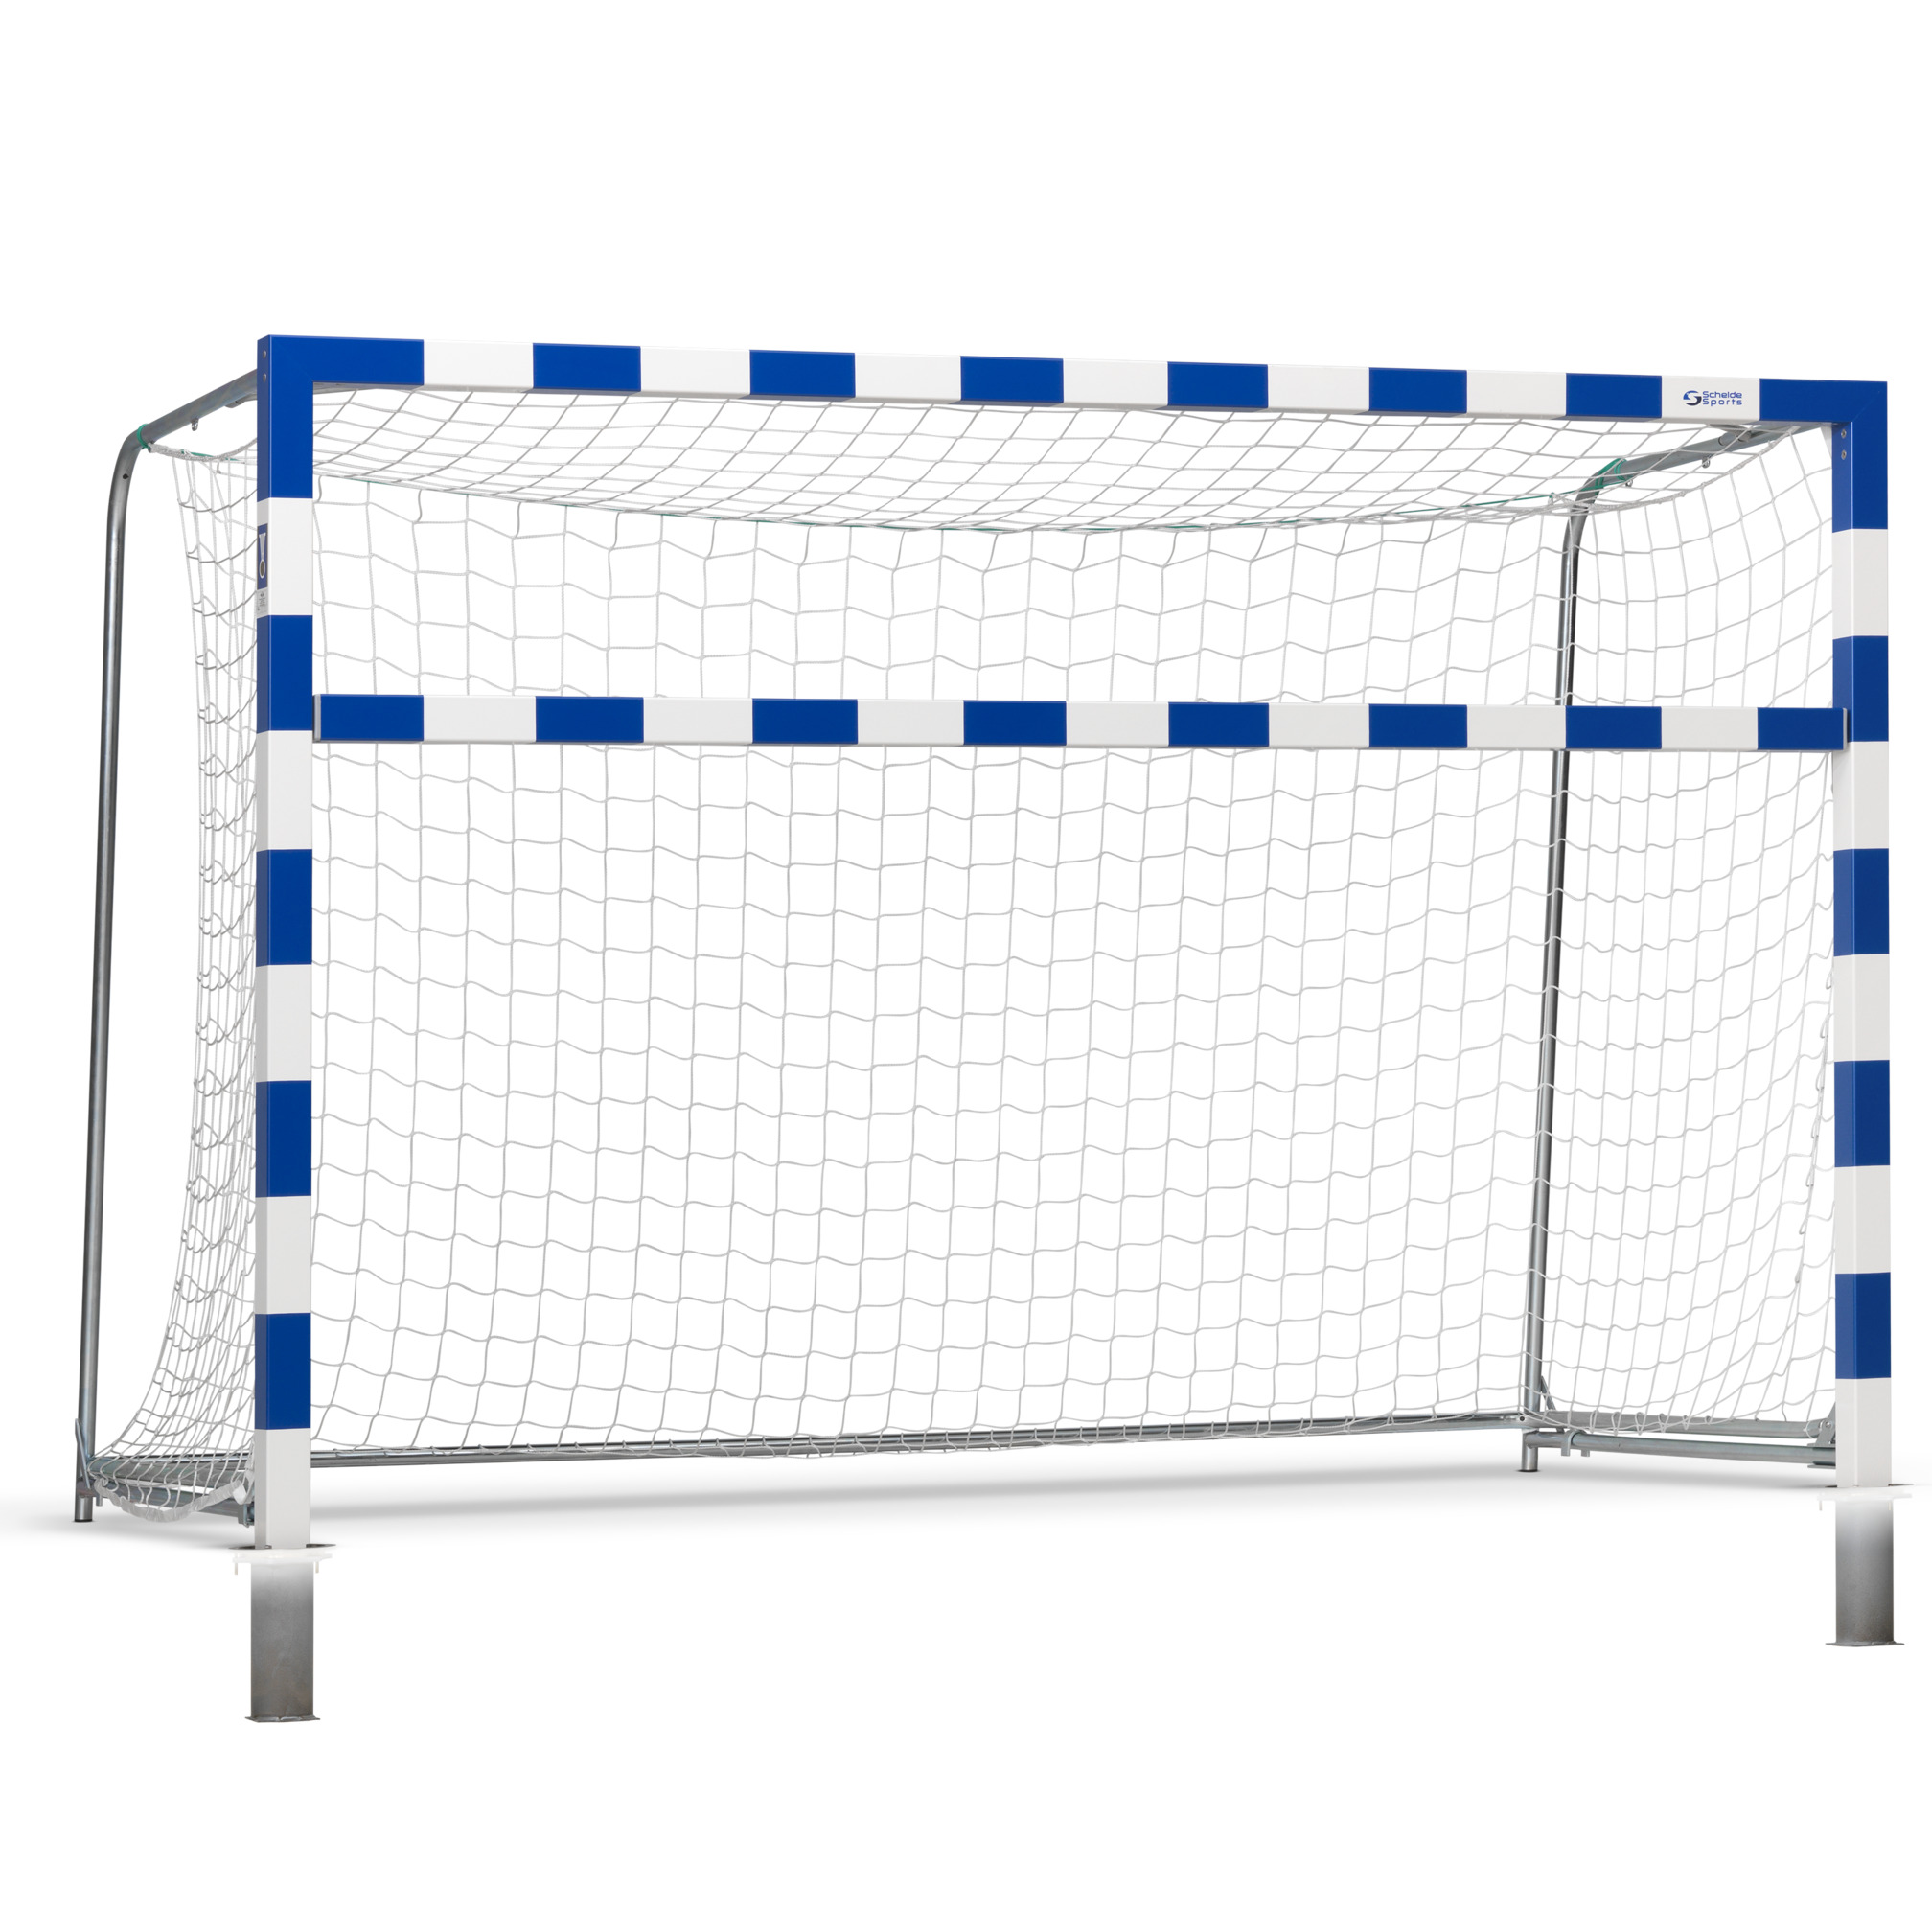 IHF handball goal, socketed